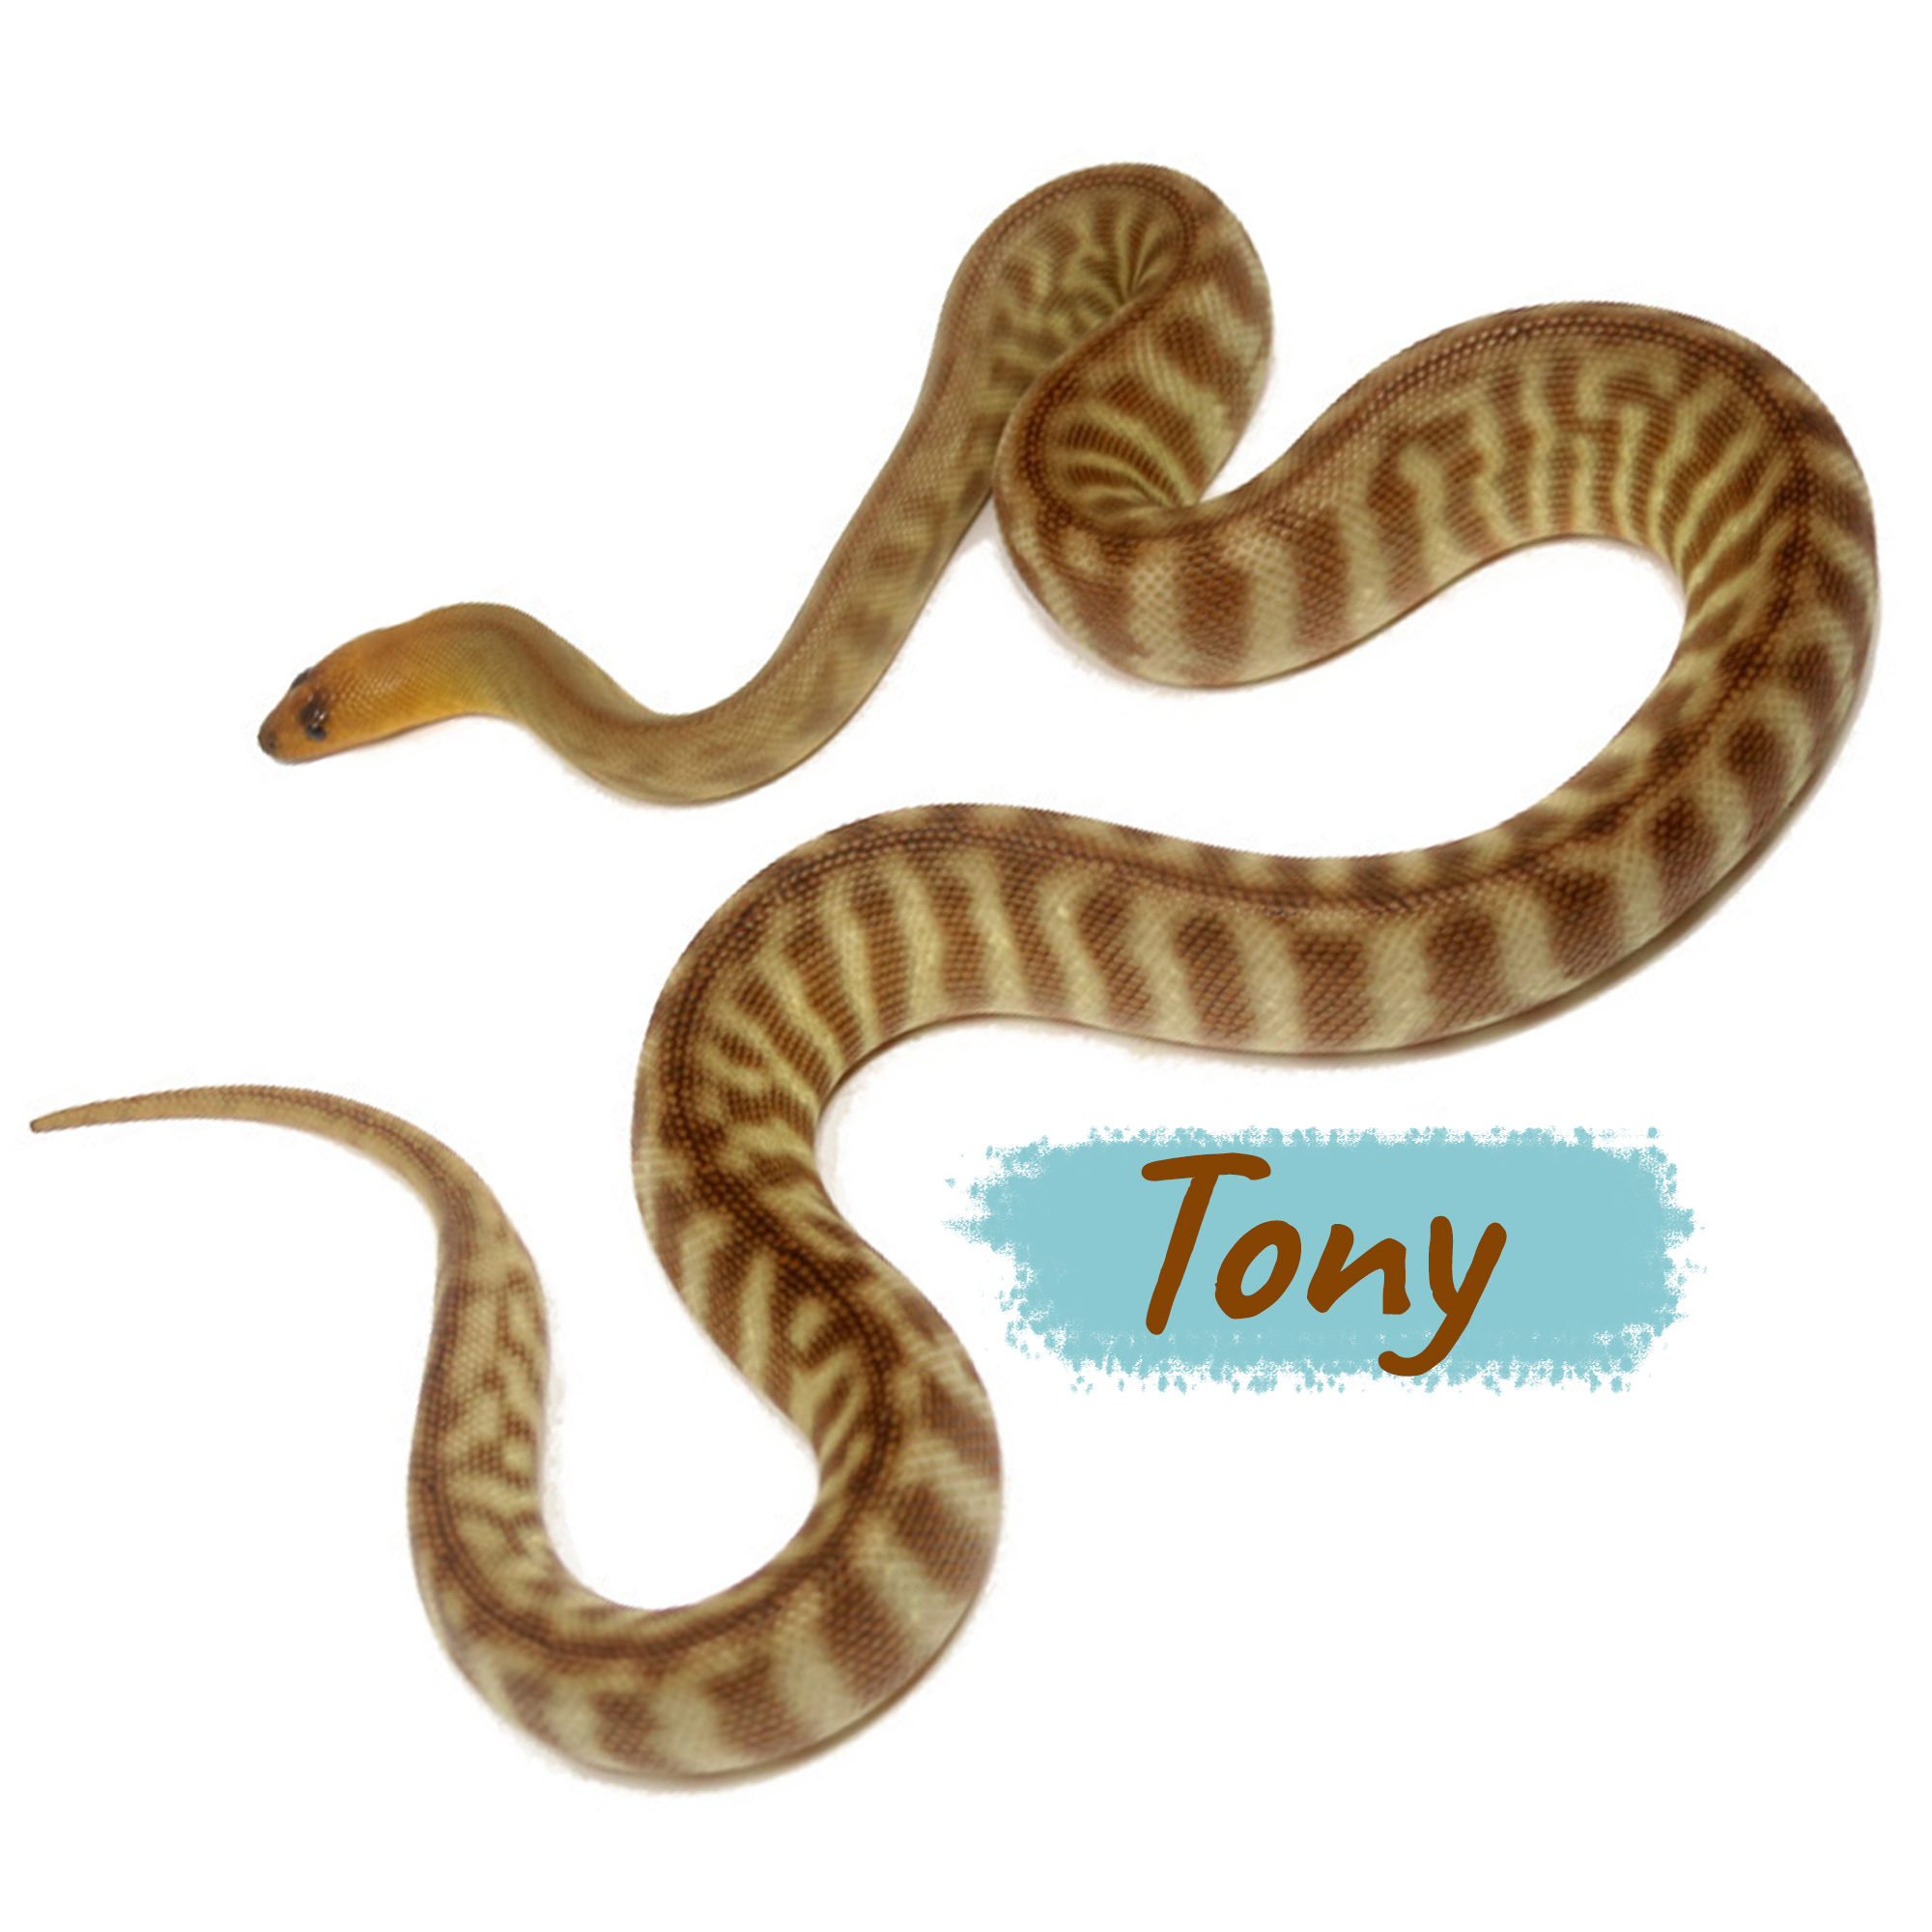 Tony Woma Python (Aspidites ramsayi)